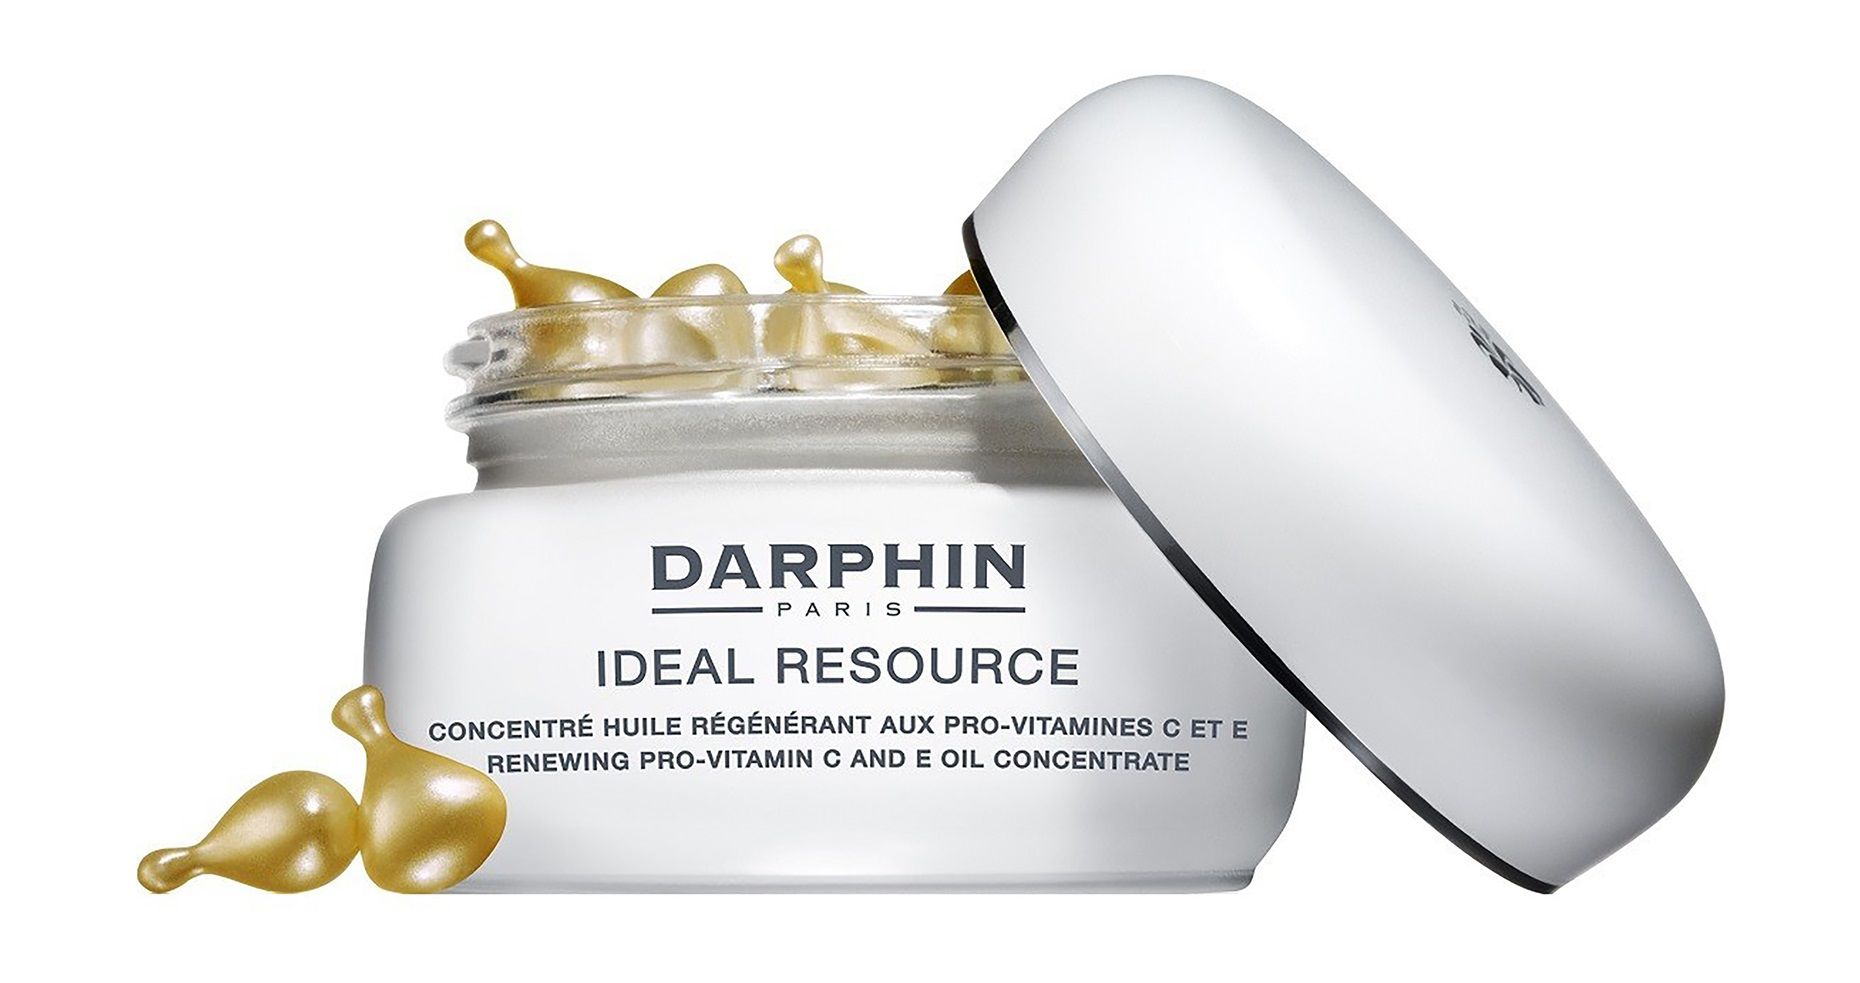 Darphin косметика. Сыворотка Darphin ideal resource. Darphin ideal resource артикул: 15292800008. Darphin ideal resource Anti age. Капсулы с ретинолом для лица.